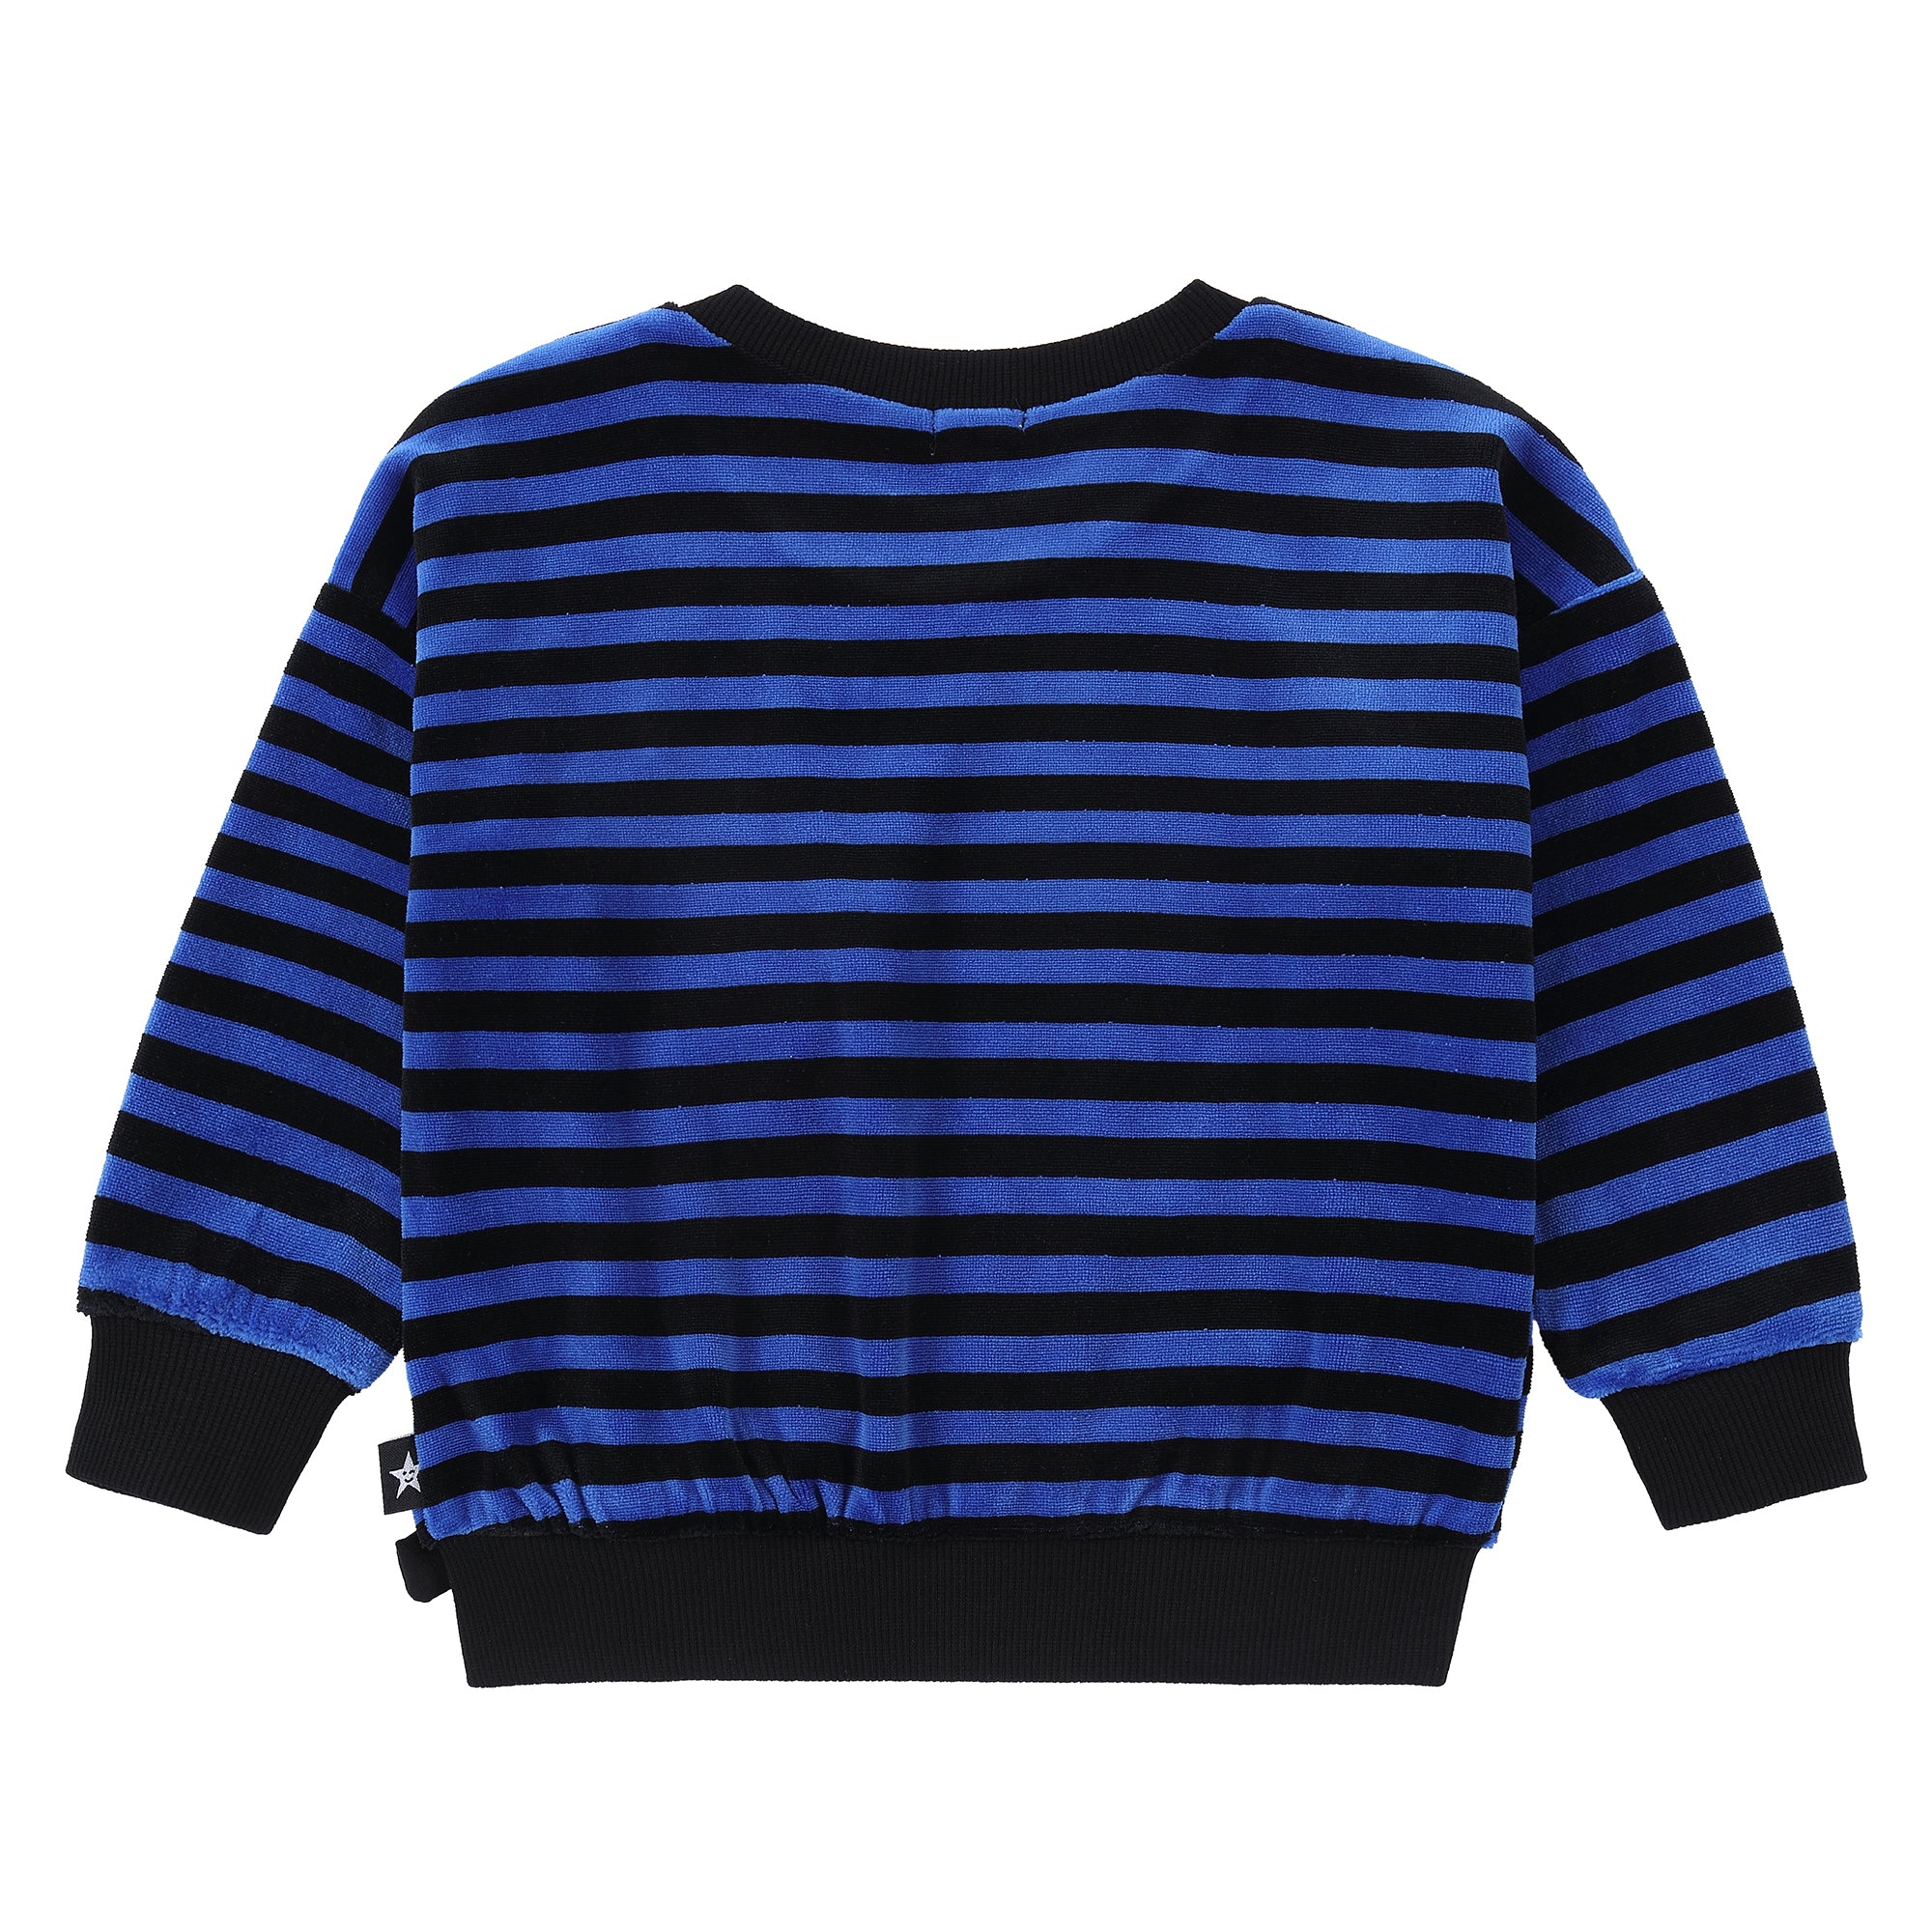 Royal Blue and Black Striped Velour Sweatshirt